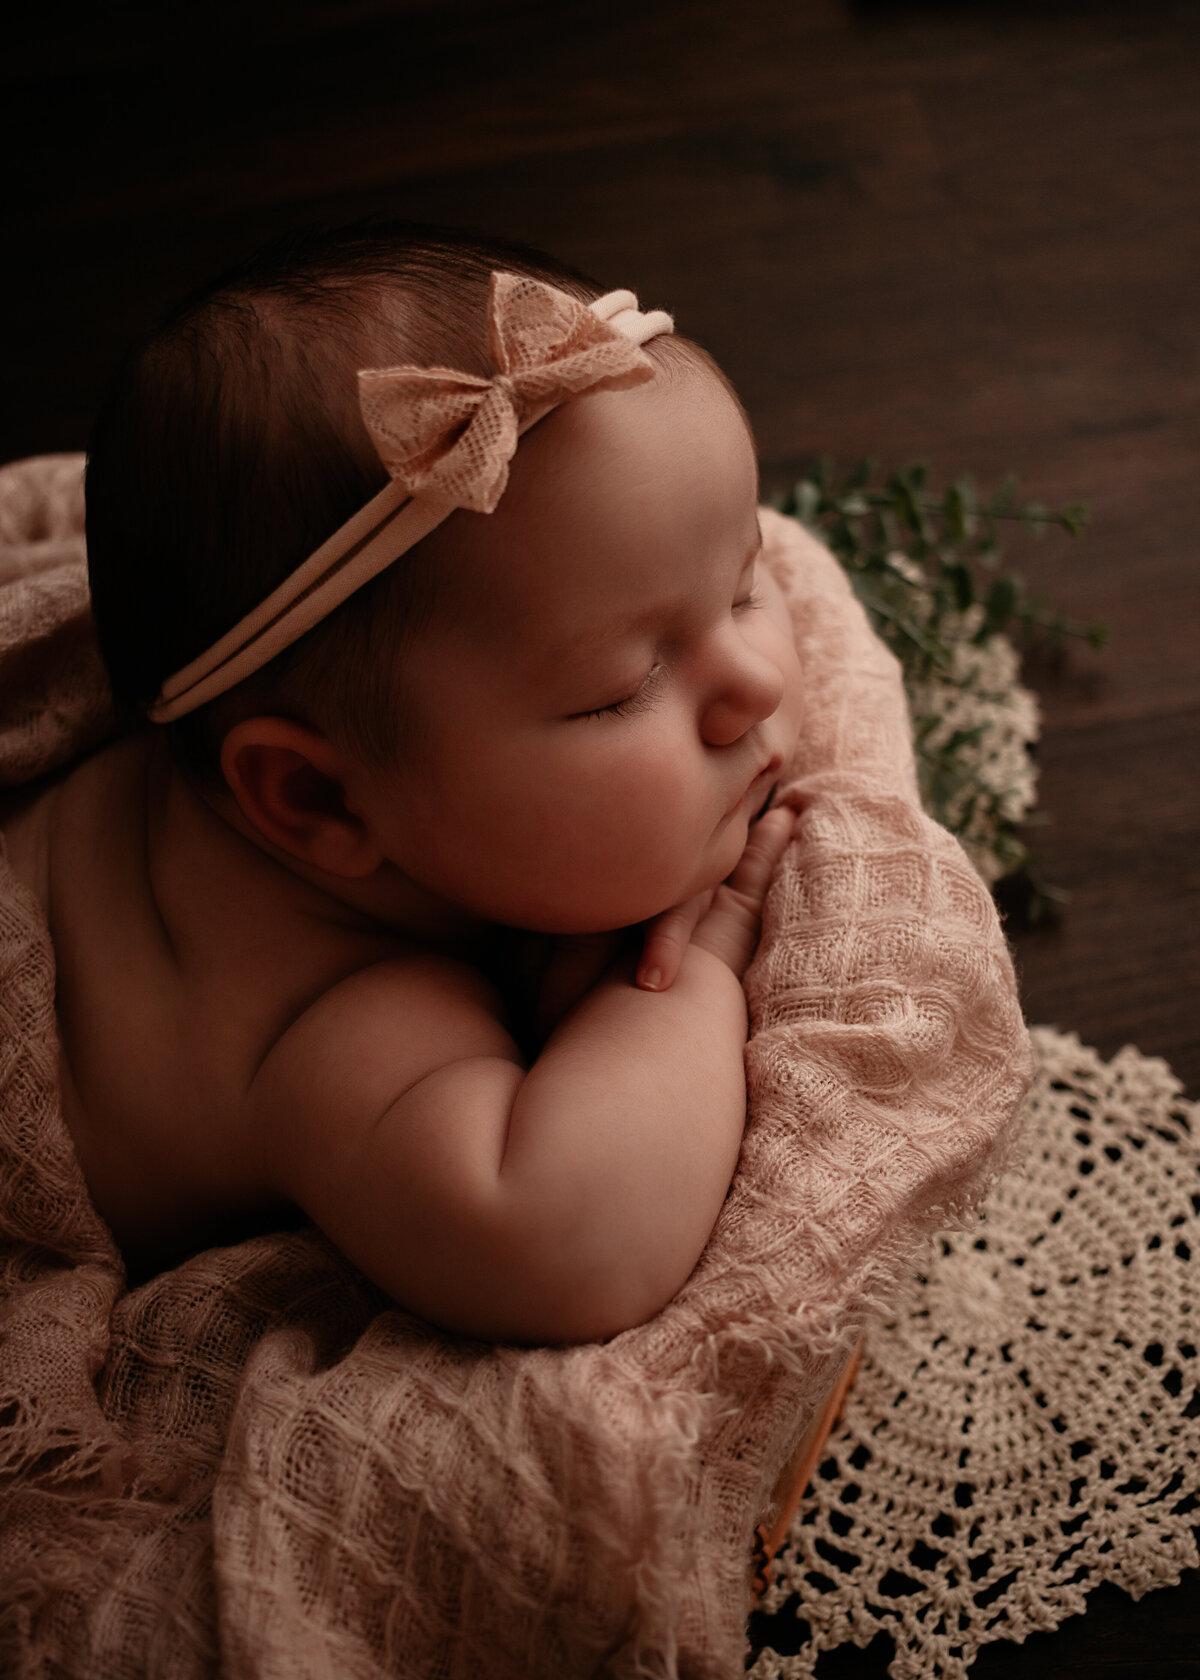 Minneapolis Newborn Photographer - Amanda Nicholle Photography